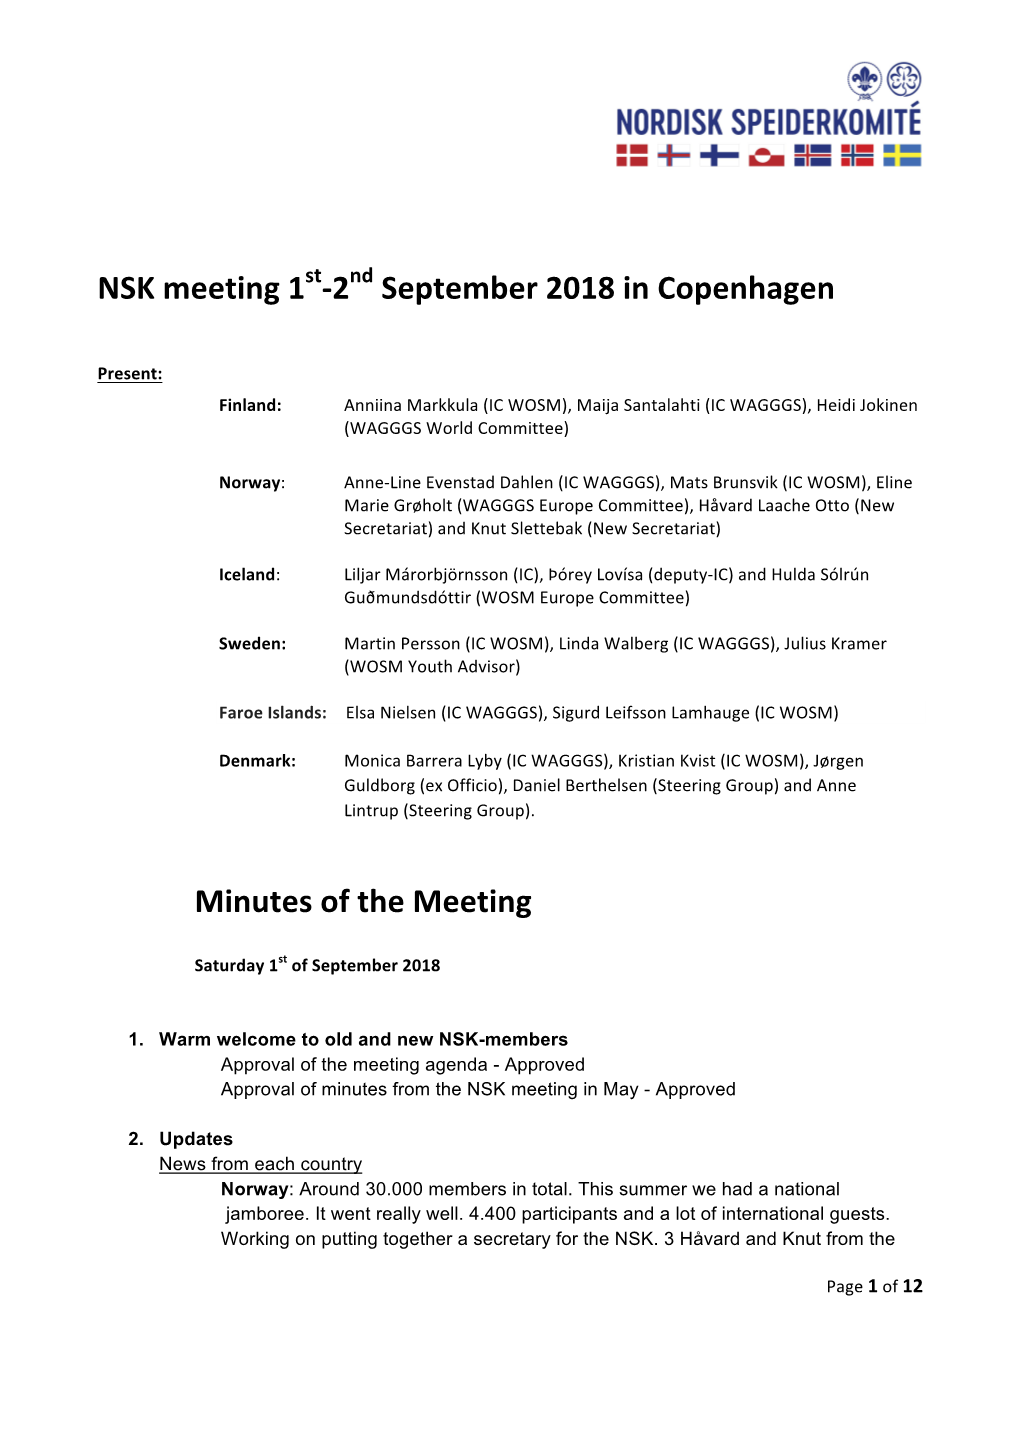 NSK Meeting Minutes Sep2018